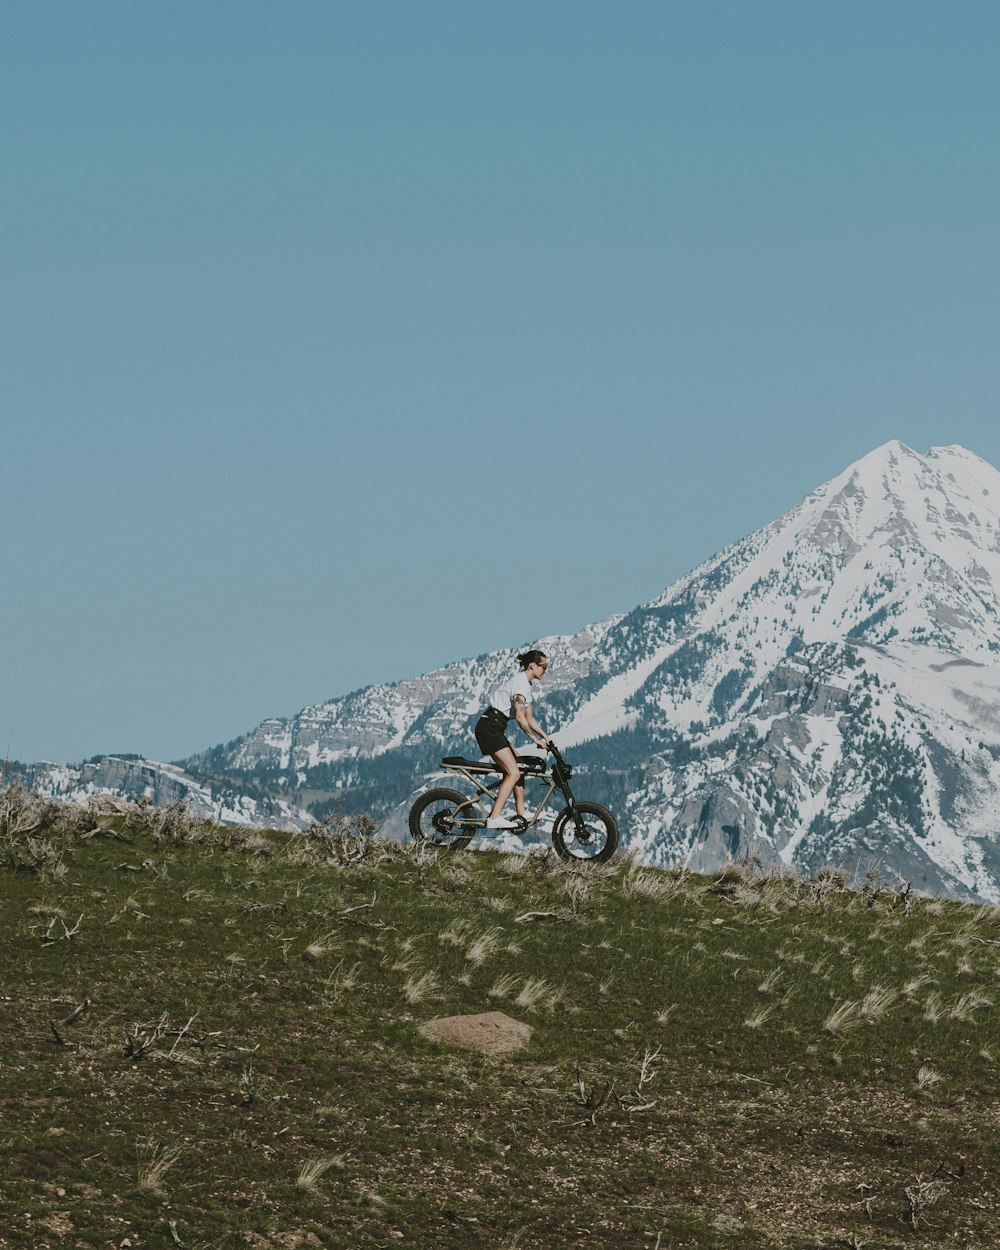 a man riding a dirt bike on top of a grass covered hill